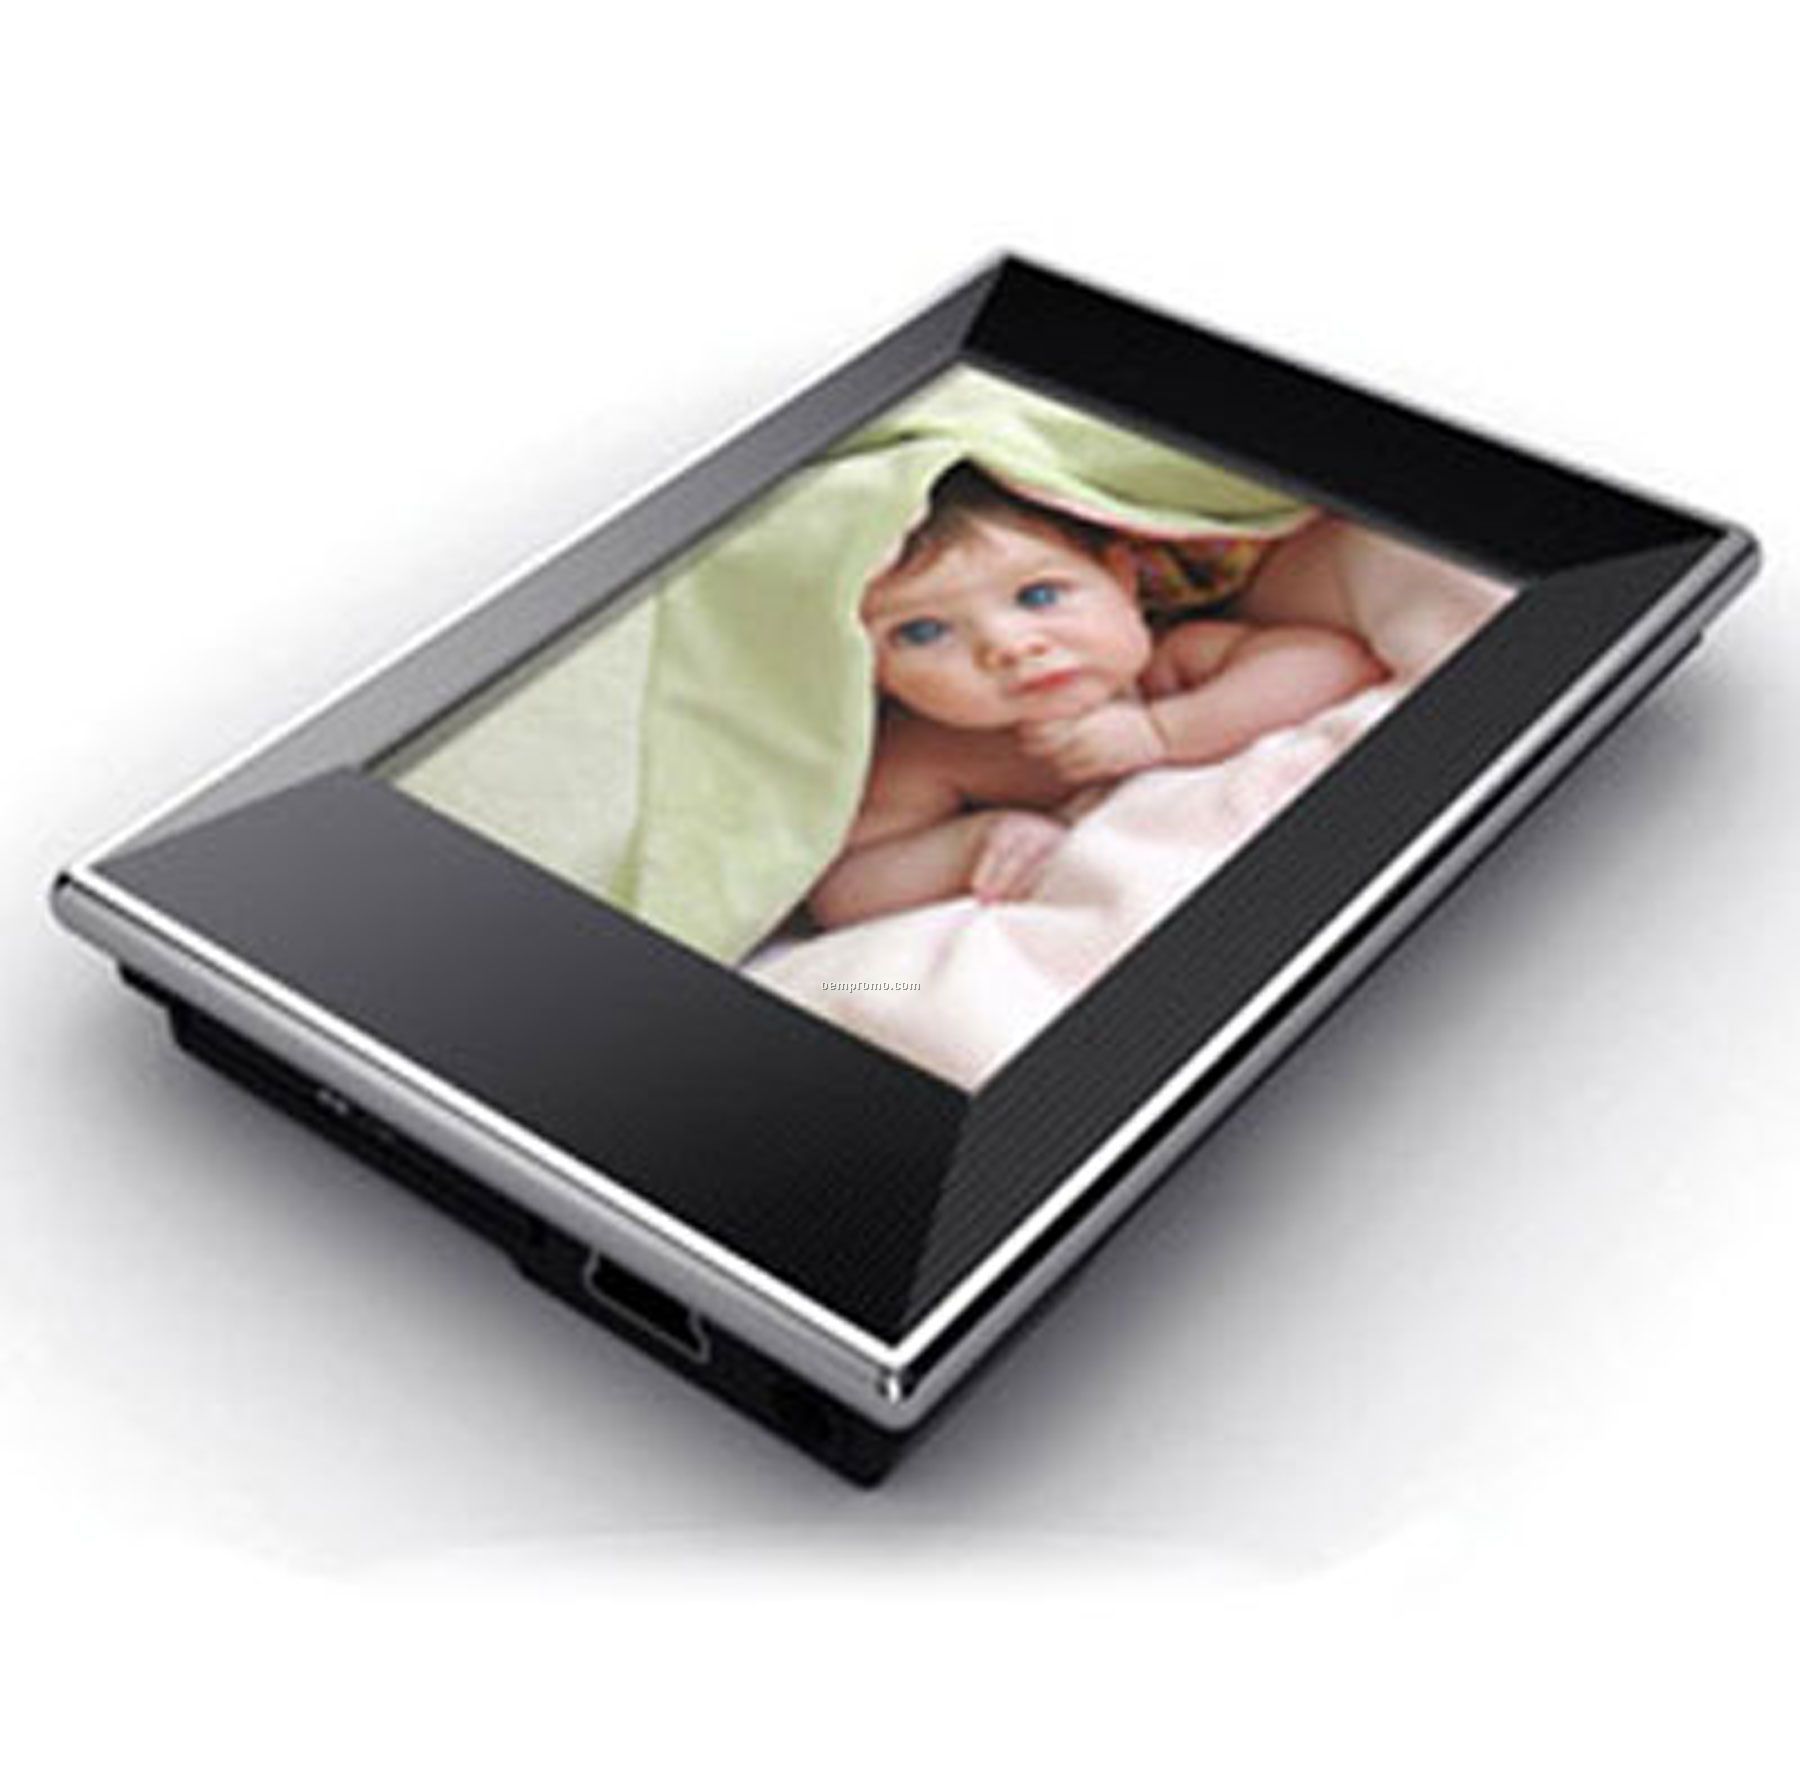 Portable 2.4-inch Digital Photo Album